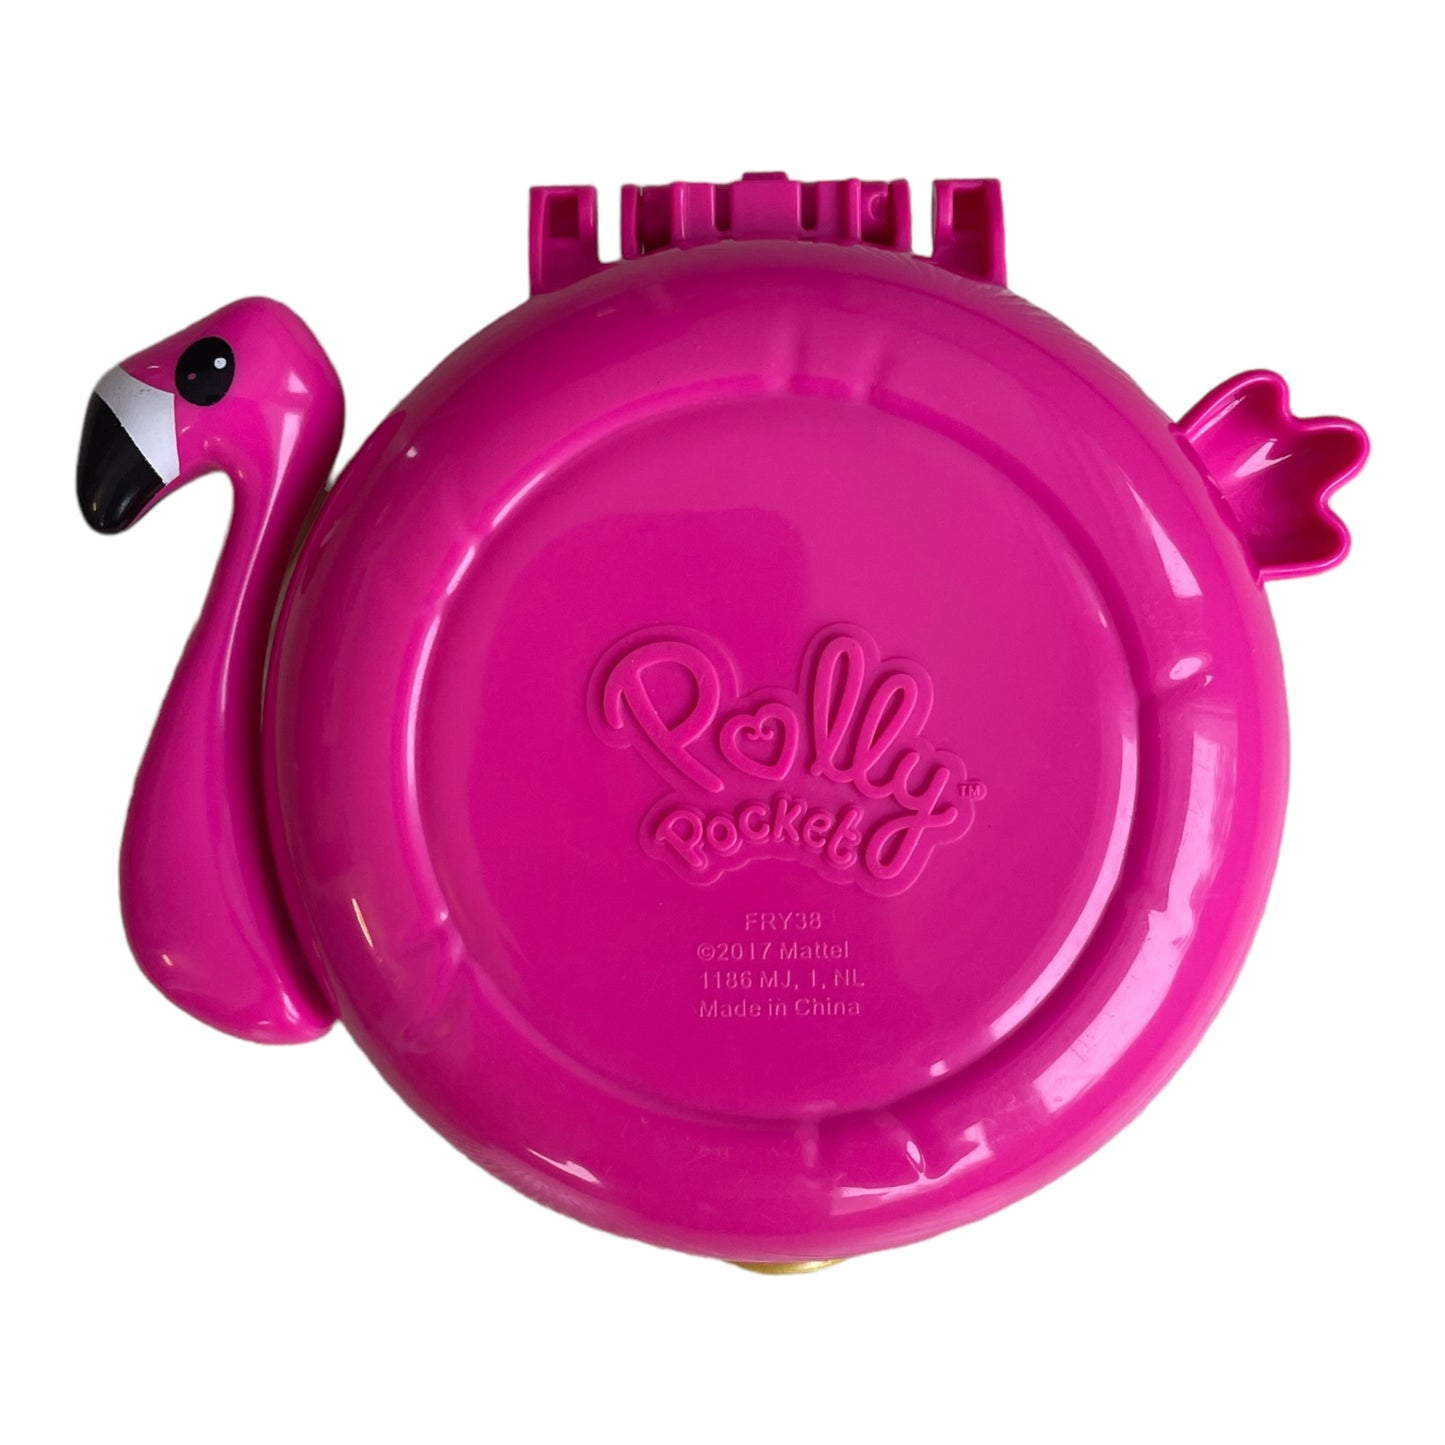 Polly Pocket - Flamingo Floatie Compact